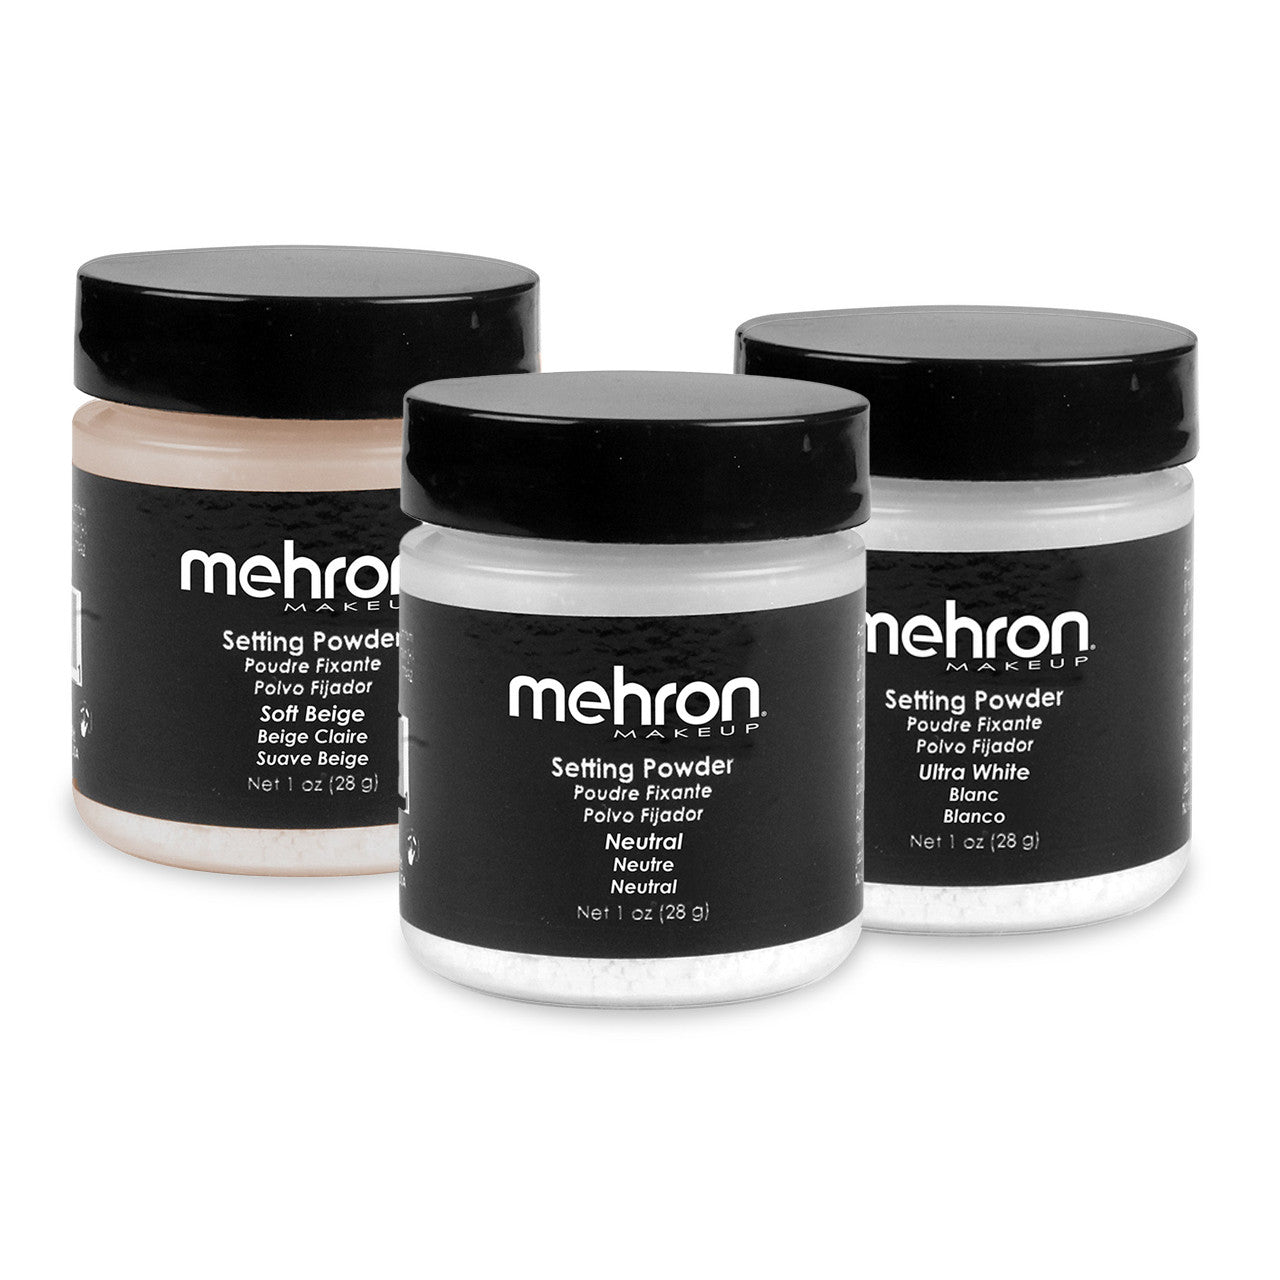 Mehron COSTUMES: MAKE-UP Setting Powder (1oz)